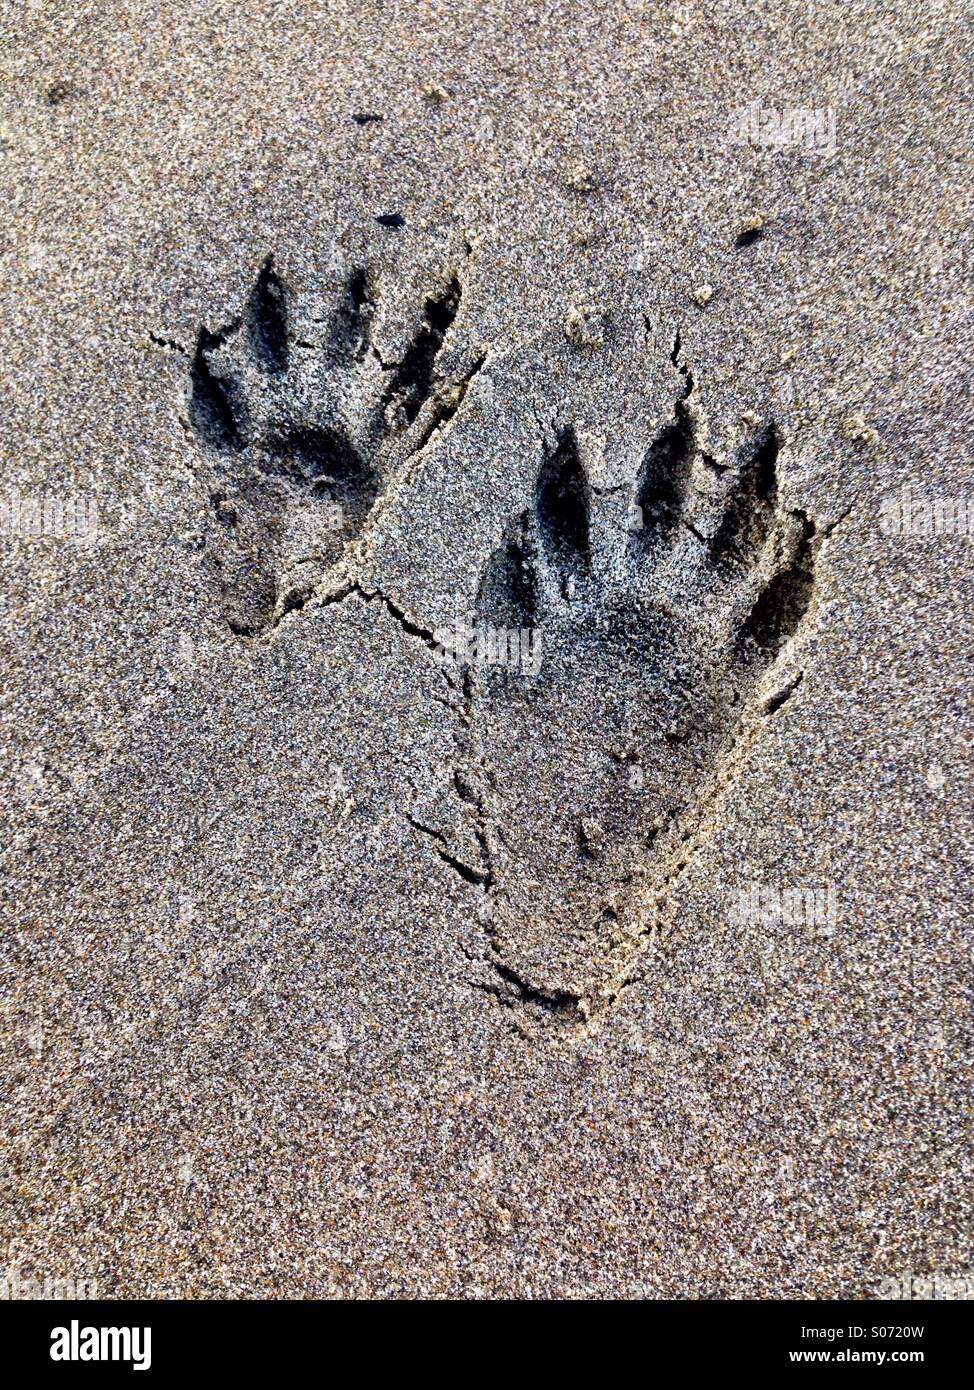 Raccoon tracks in the sand Stock Photo